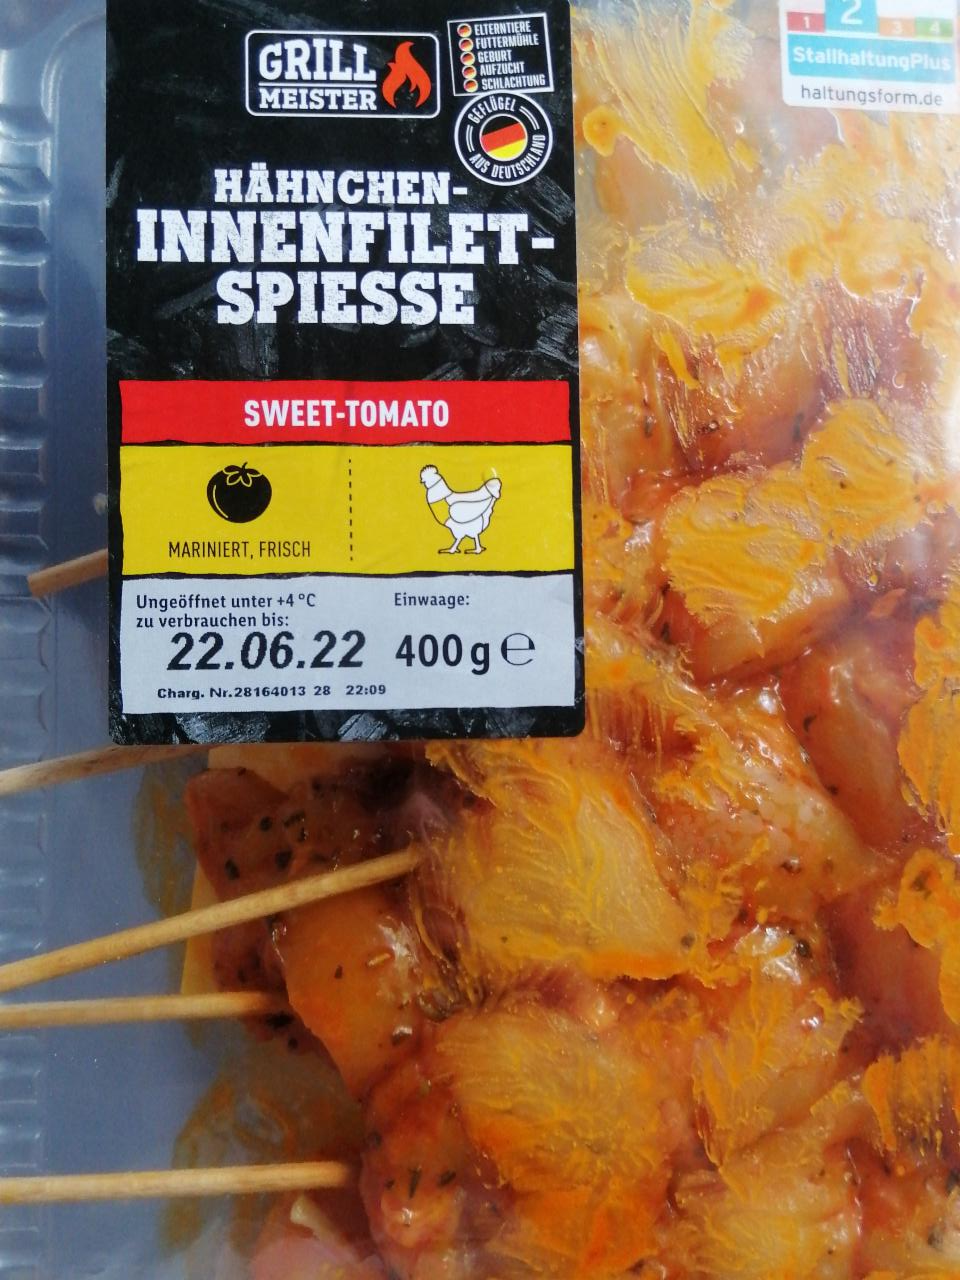 Fotografie - Hähnchen-innenfilet-spiesse Sweet tomato Grill Meister